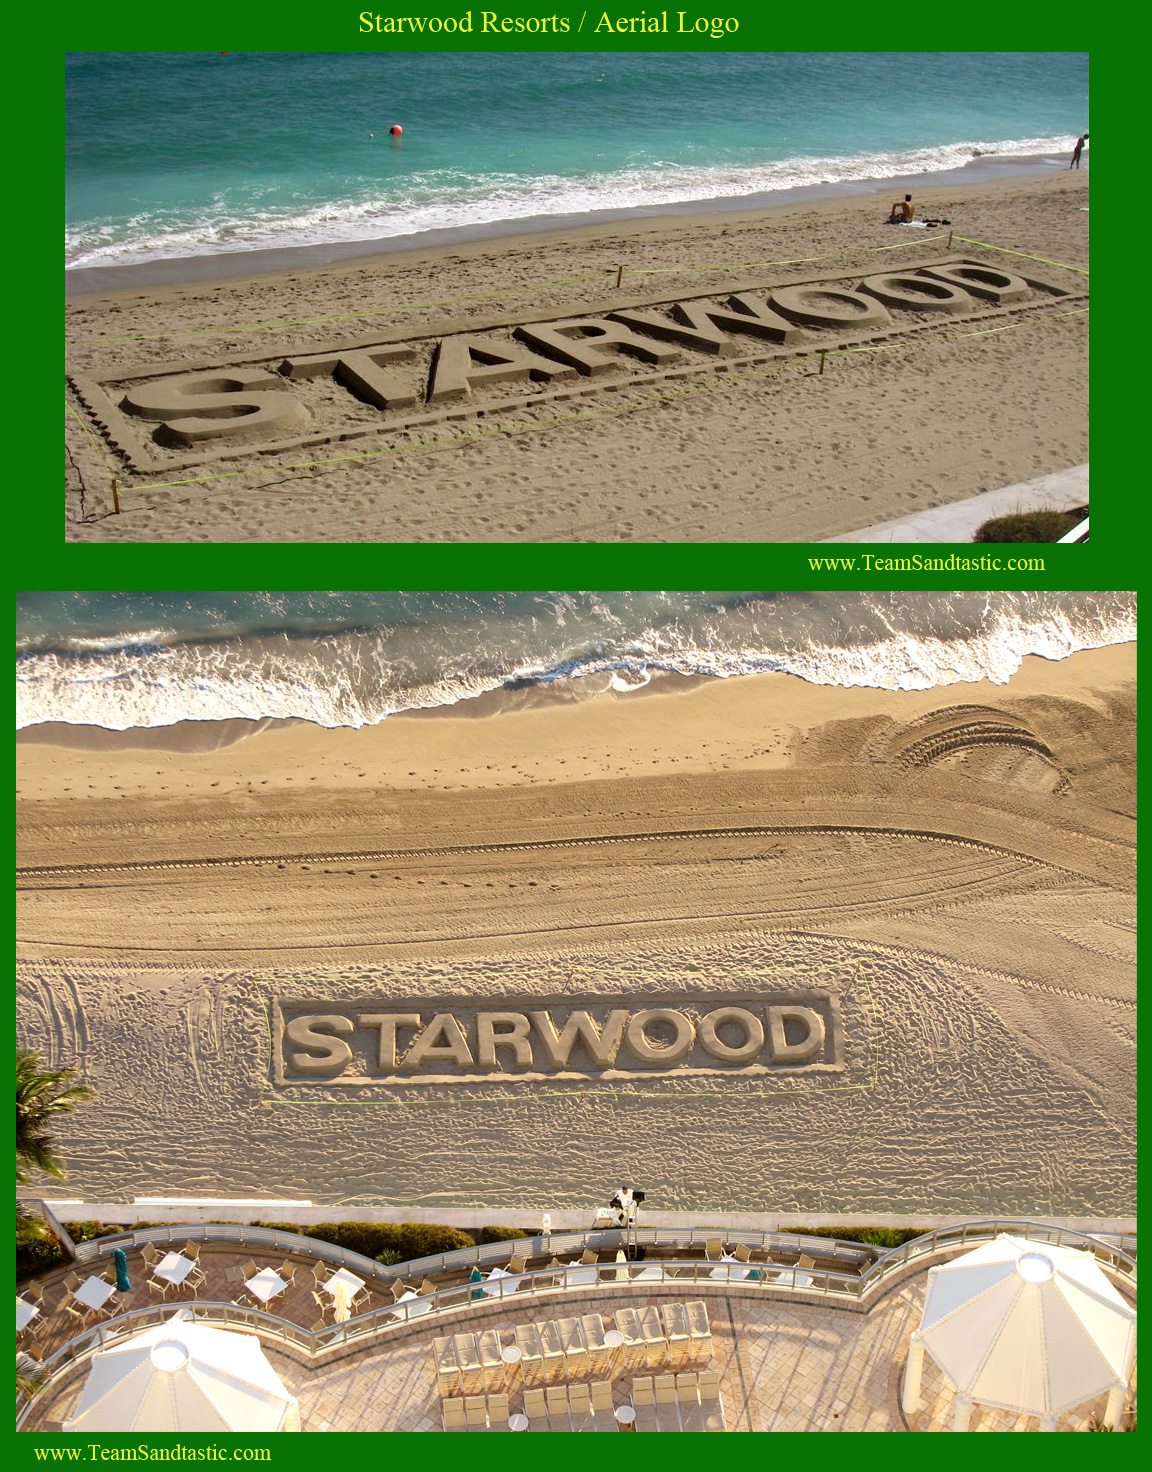 Starwood Sand Sculpture